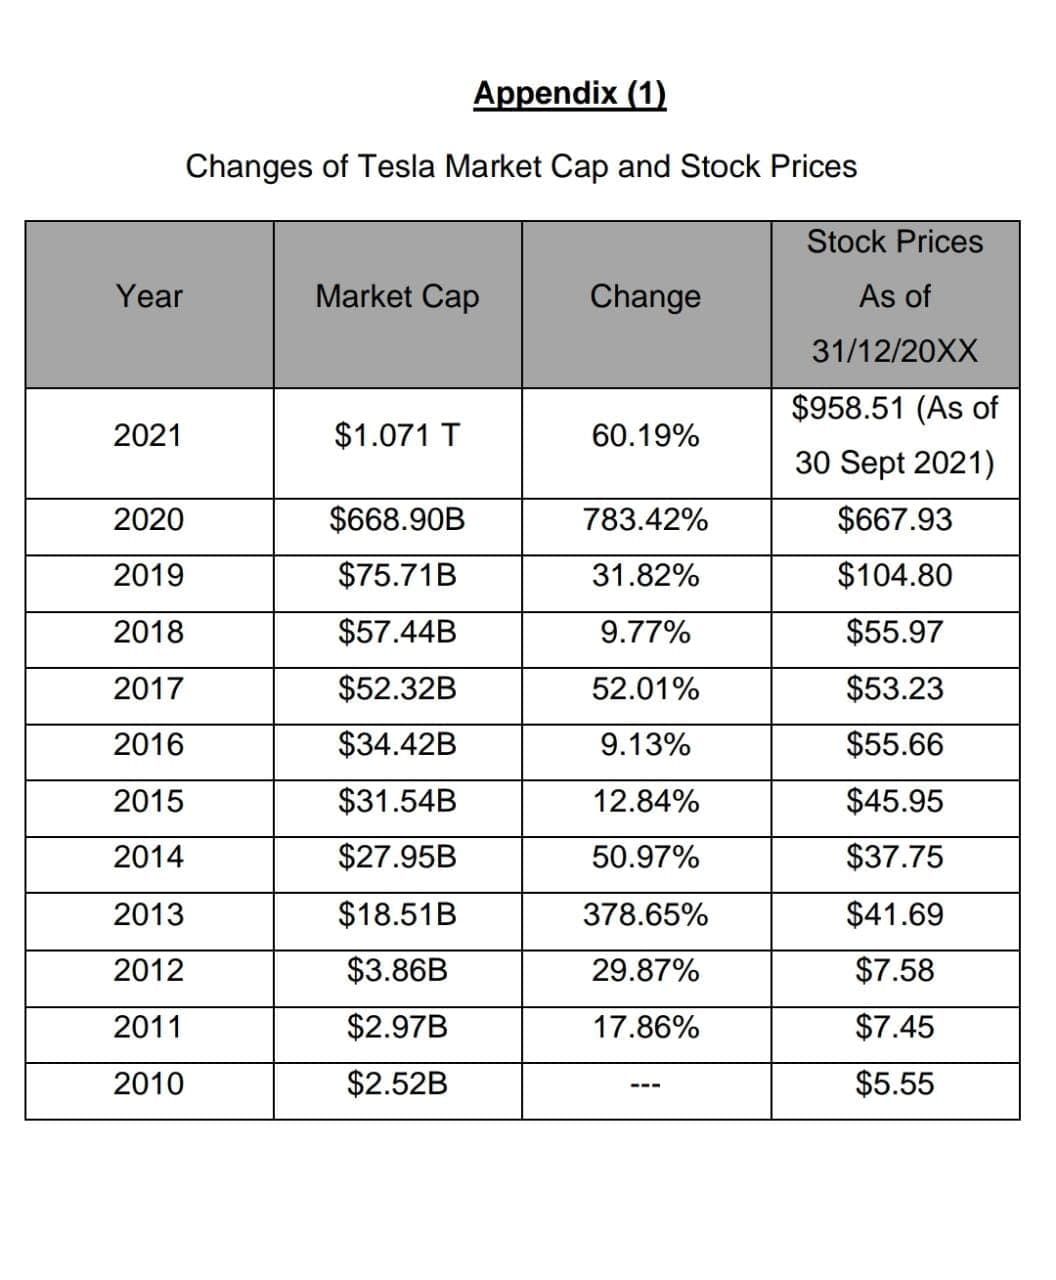 Appendix (1)
Changes of Tesla Market Cap and Stock Prices
Stock Prices
Year
Market Cap
Change
As of
31/12/20XX
$958.51 (As of
2021
$1.071 T
60.19%
30 Sept 2021)
2020
$668.90B
783.42%
$667.93
2019
$75.71B
31.82%
$104.80
2018
$57.44B
9.77%
$55.97
2017
$52.32B
52.01%
$53.23
2016
$34.42B
9.13%
$55.66
2015
$31.54B
12.84%
$45.95
2014
$27.95B
50.97%
$37.75
2013
$18.51B
378.65%
$41.69
2012
$3.86B
29.87%
$7.58
2011
$2.97B
17.86%
$7.45
2010
$2.52B
$5.55
